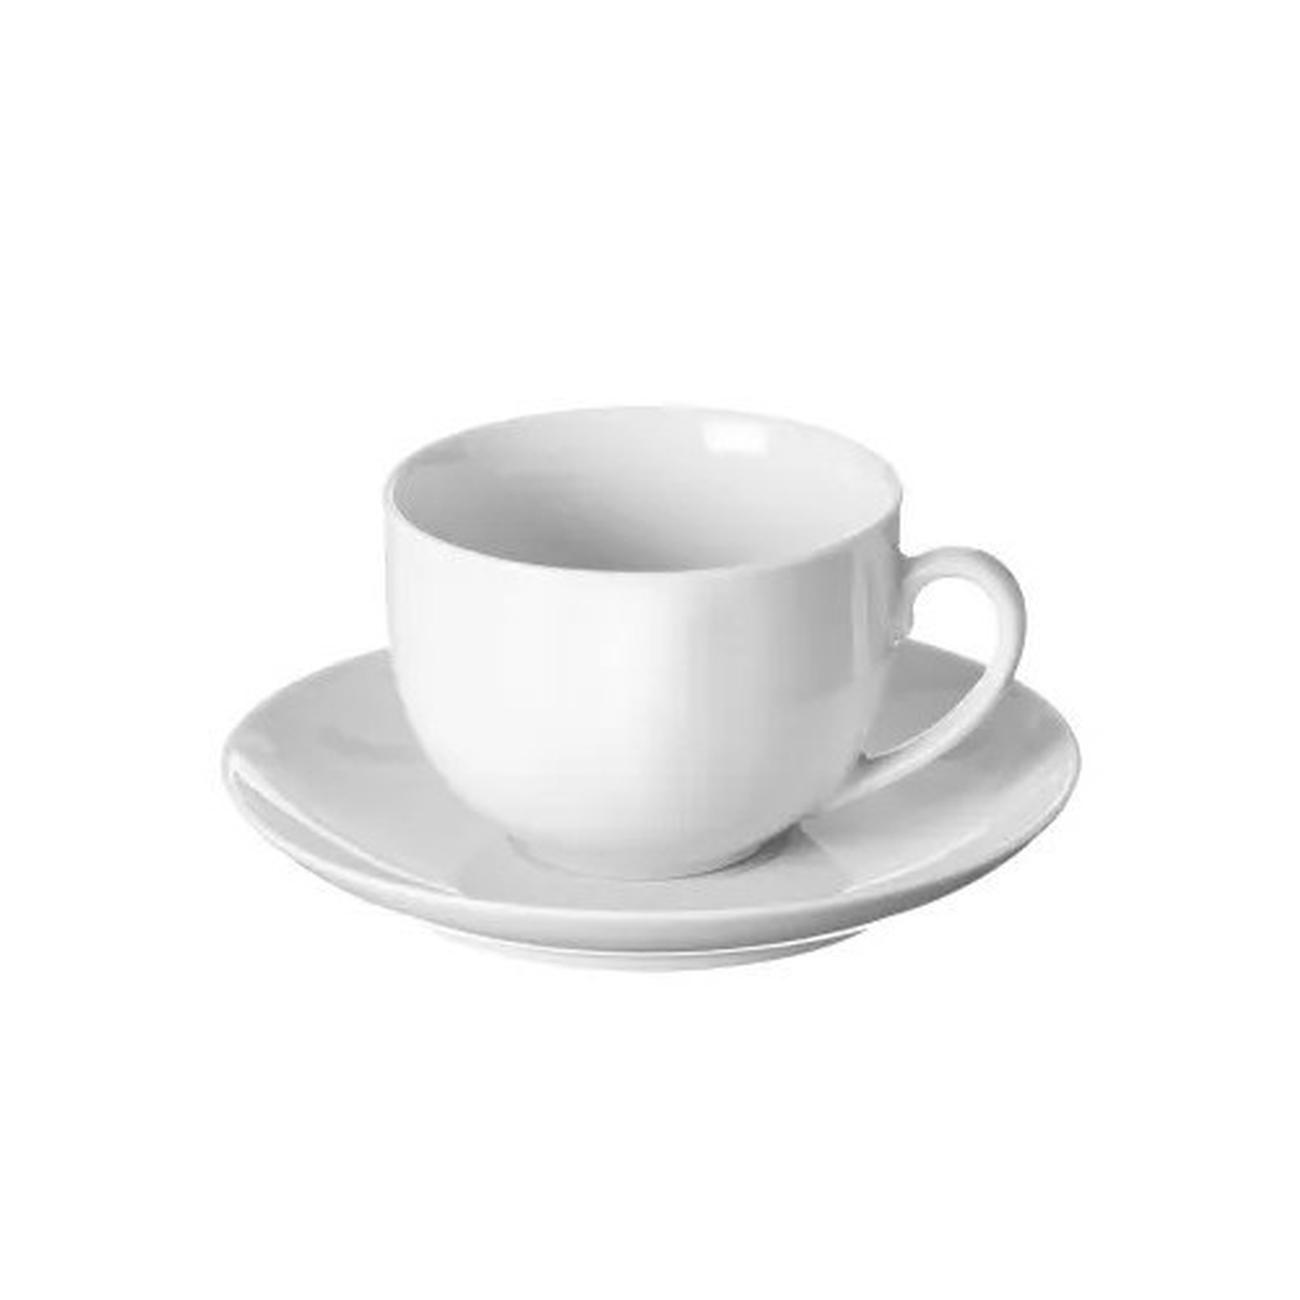 price-kensington-simplicity-white-teacup-saucer - Price & Kensington Simplicity White Teacup & Saucer